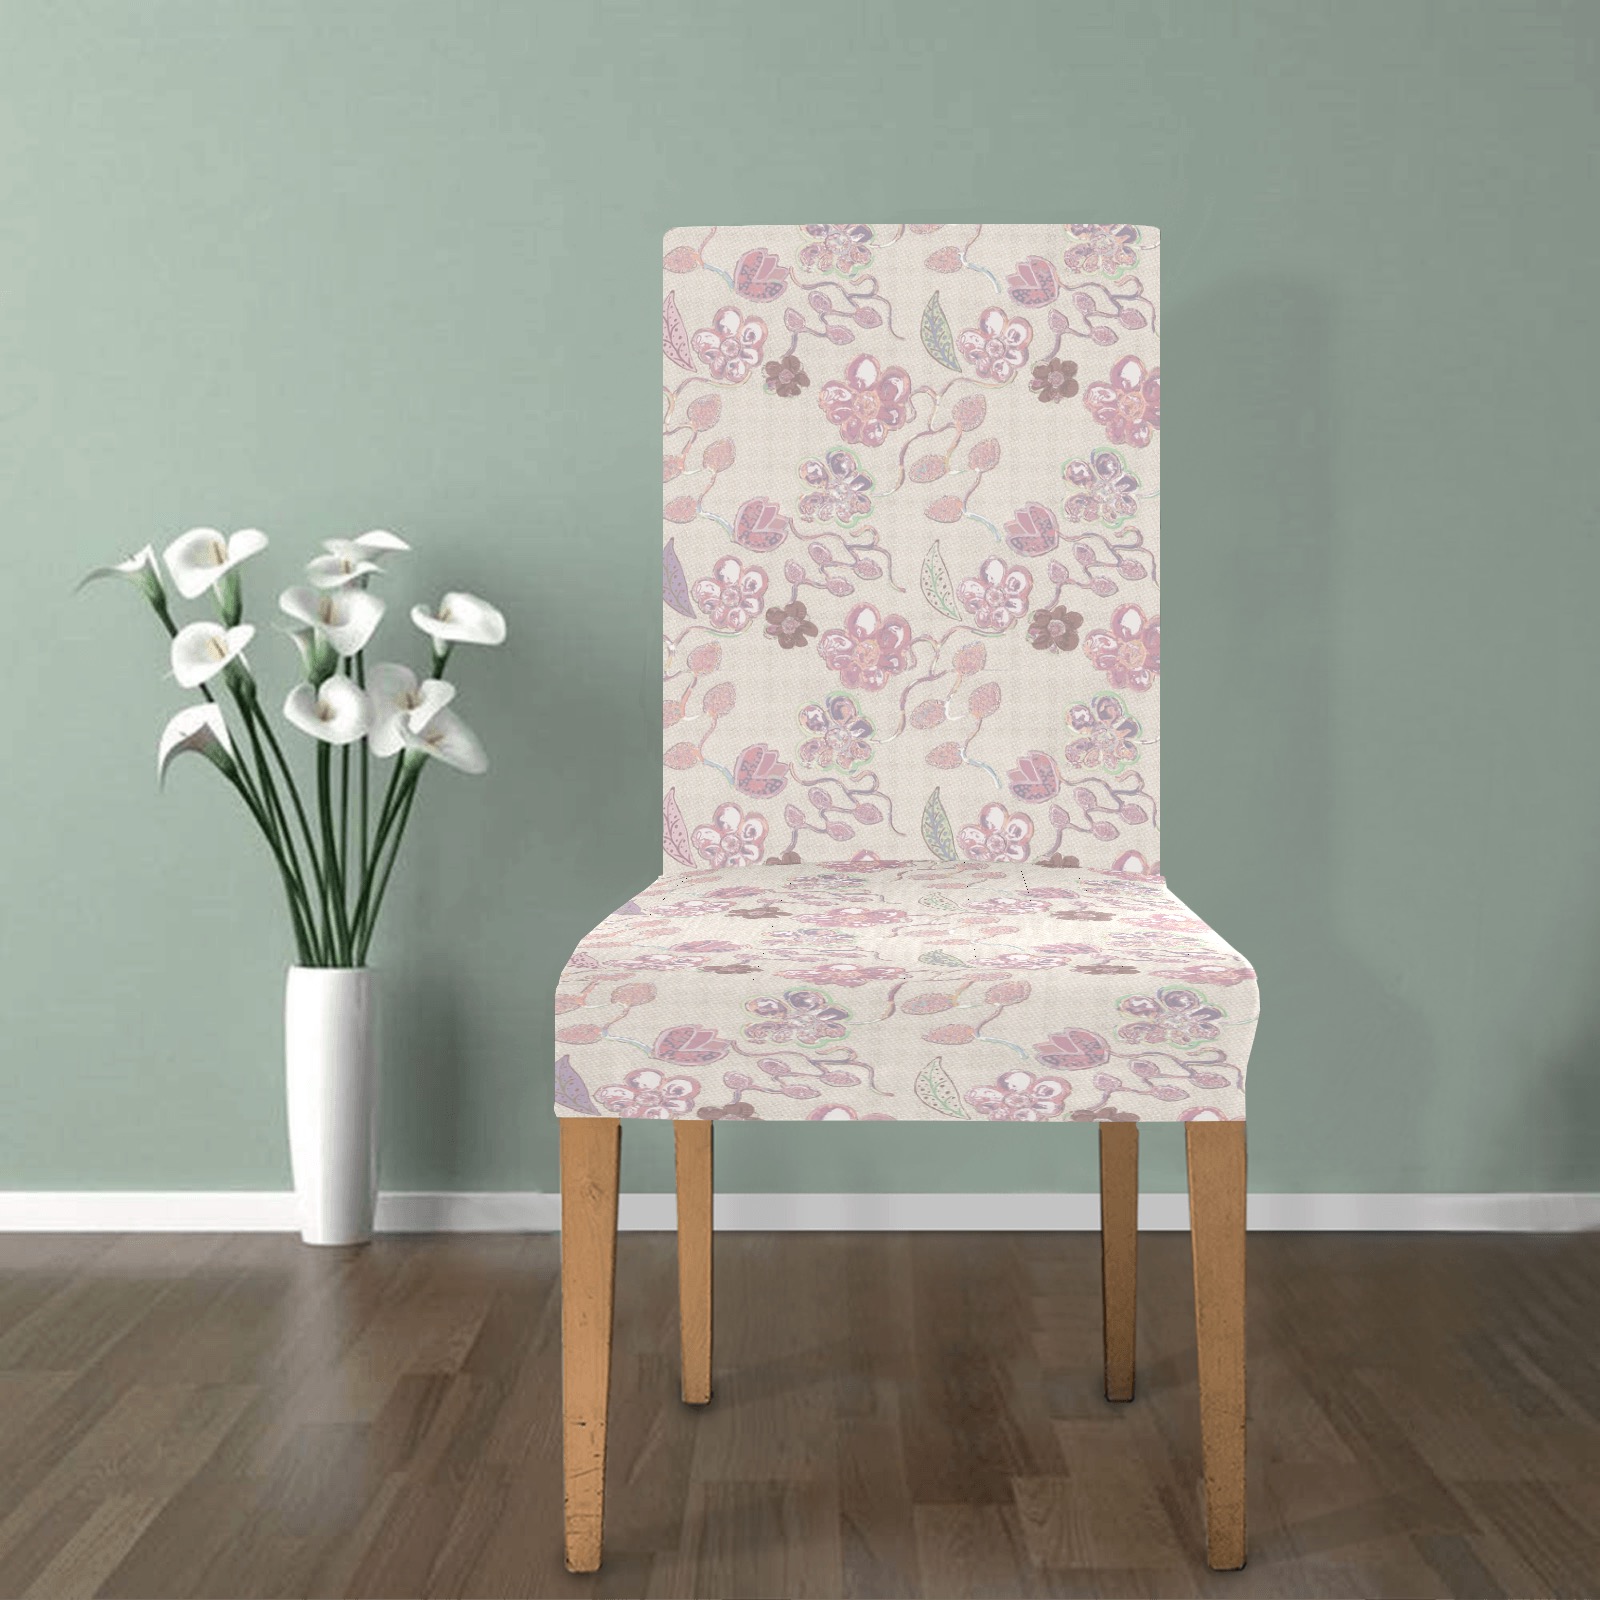 Unique Soft Beige Floral Vintage Removable Dining Chair Cover